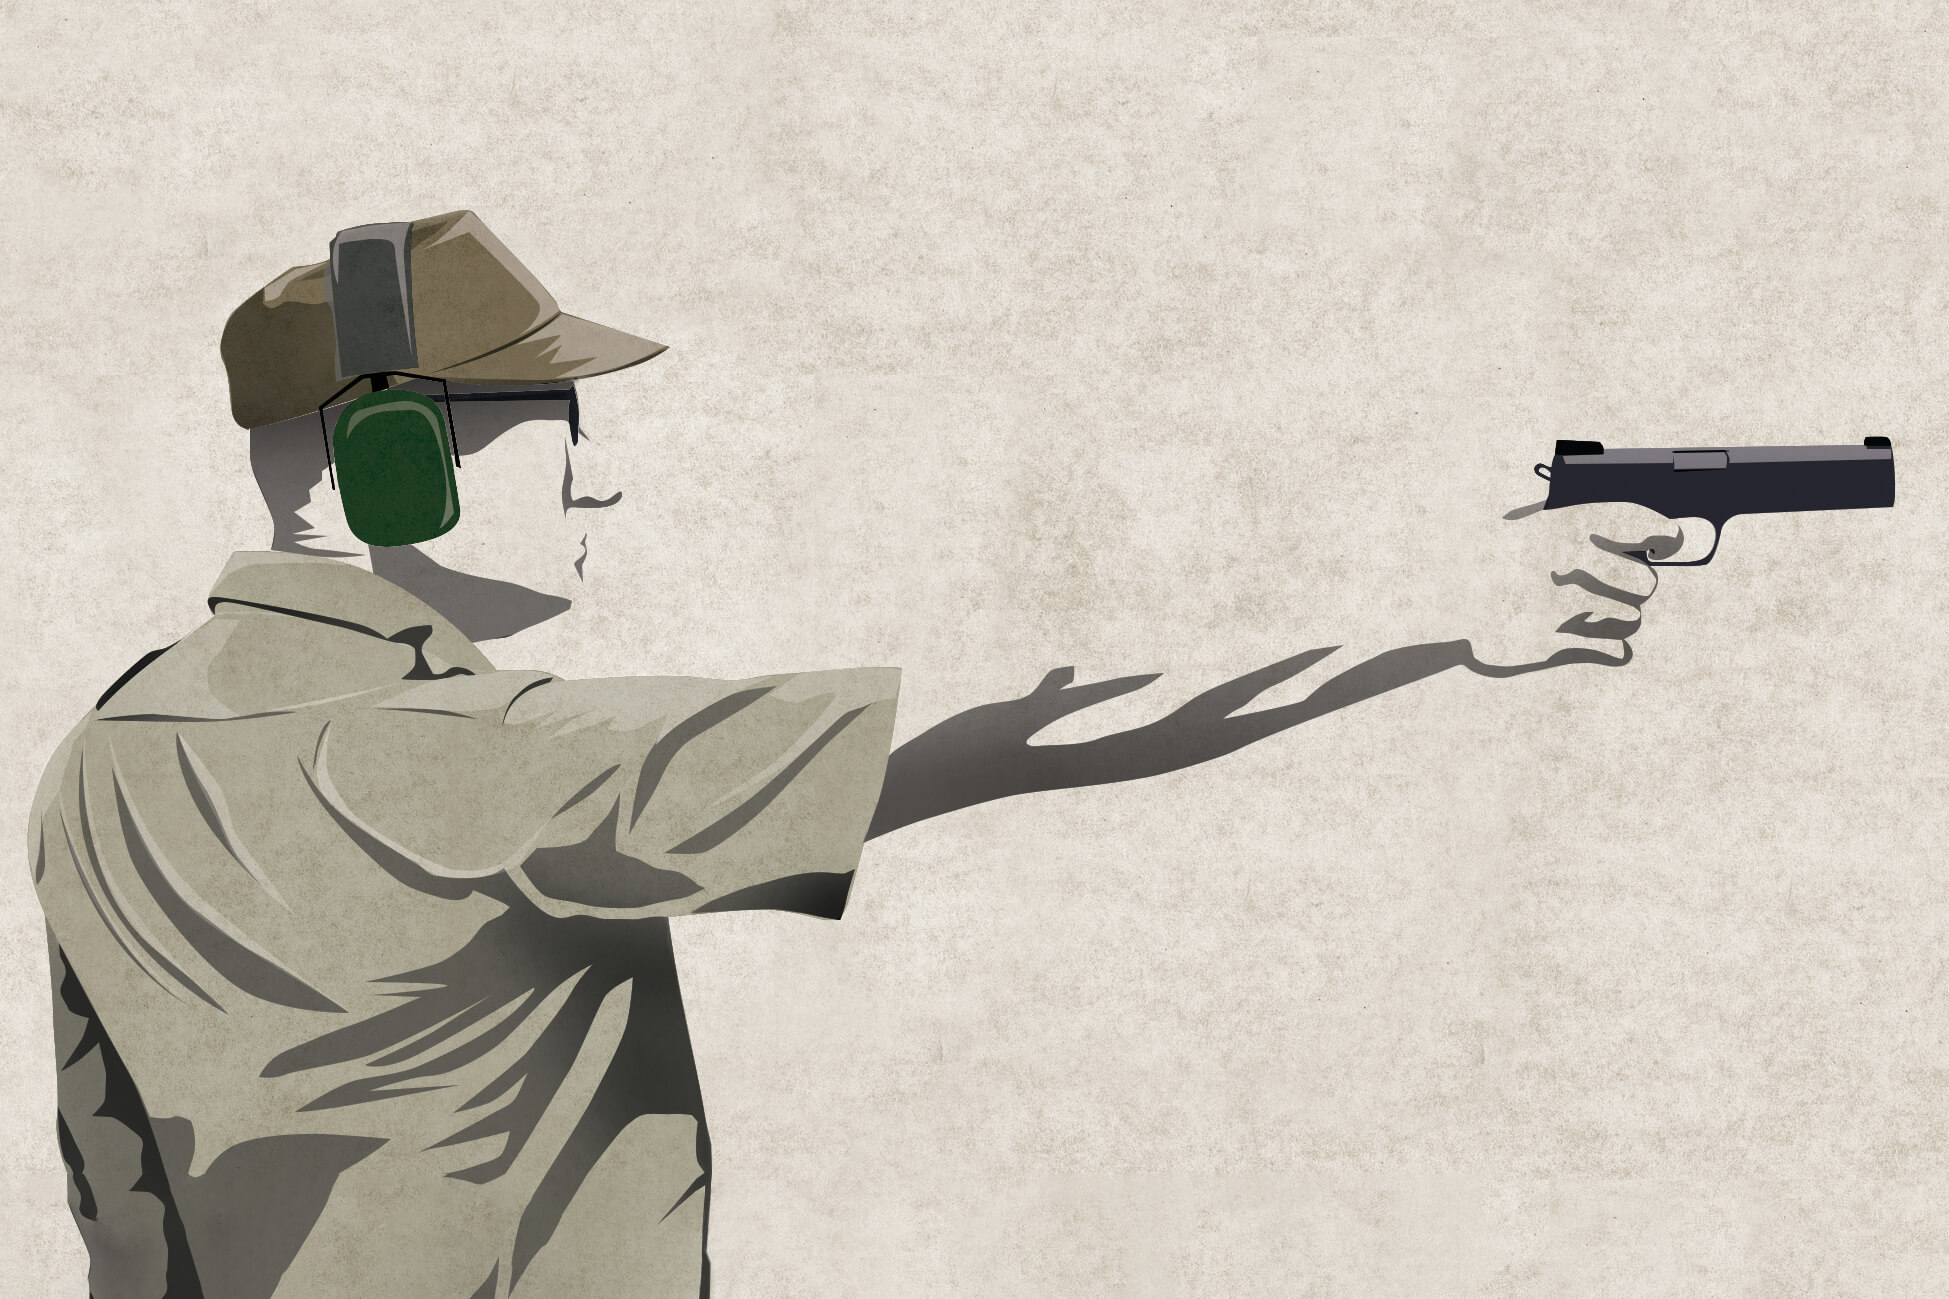 James Clark: A Hard-Working Handgun Hero